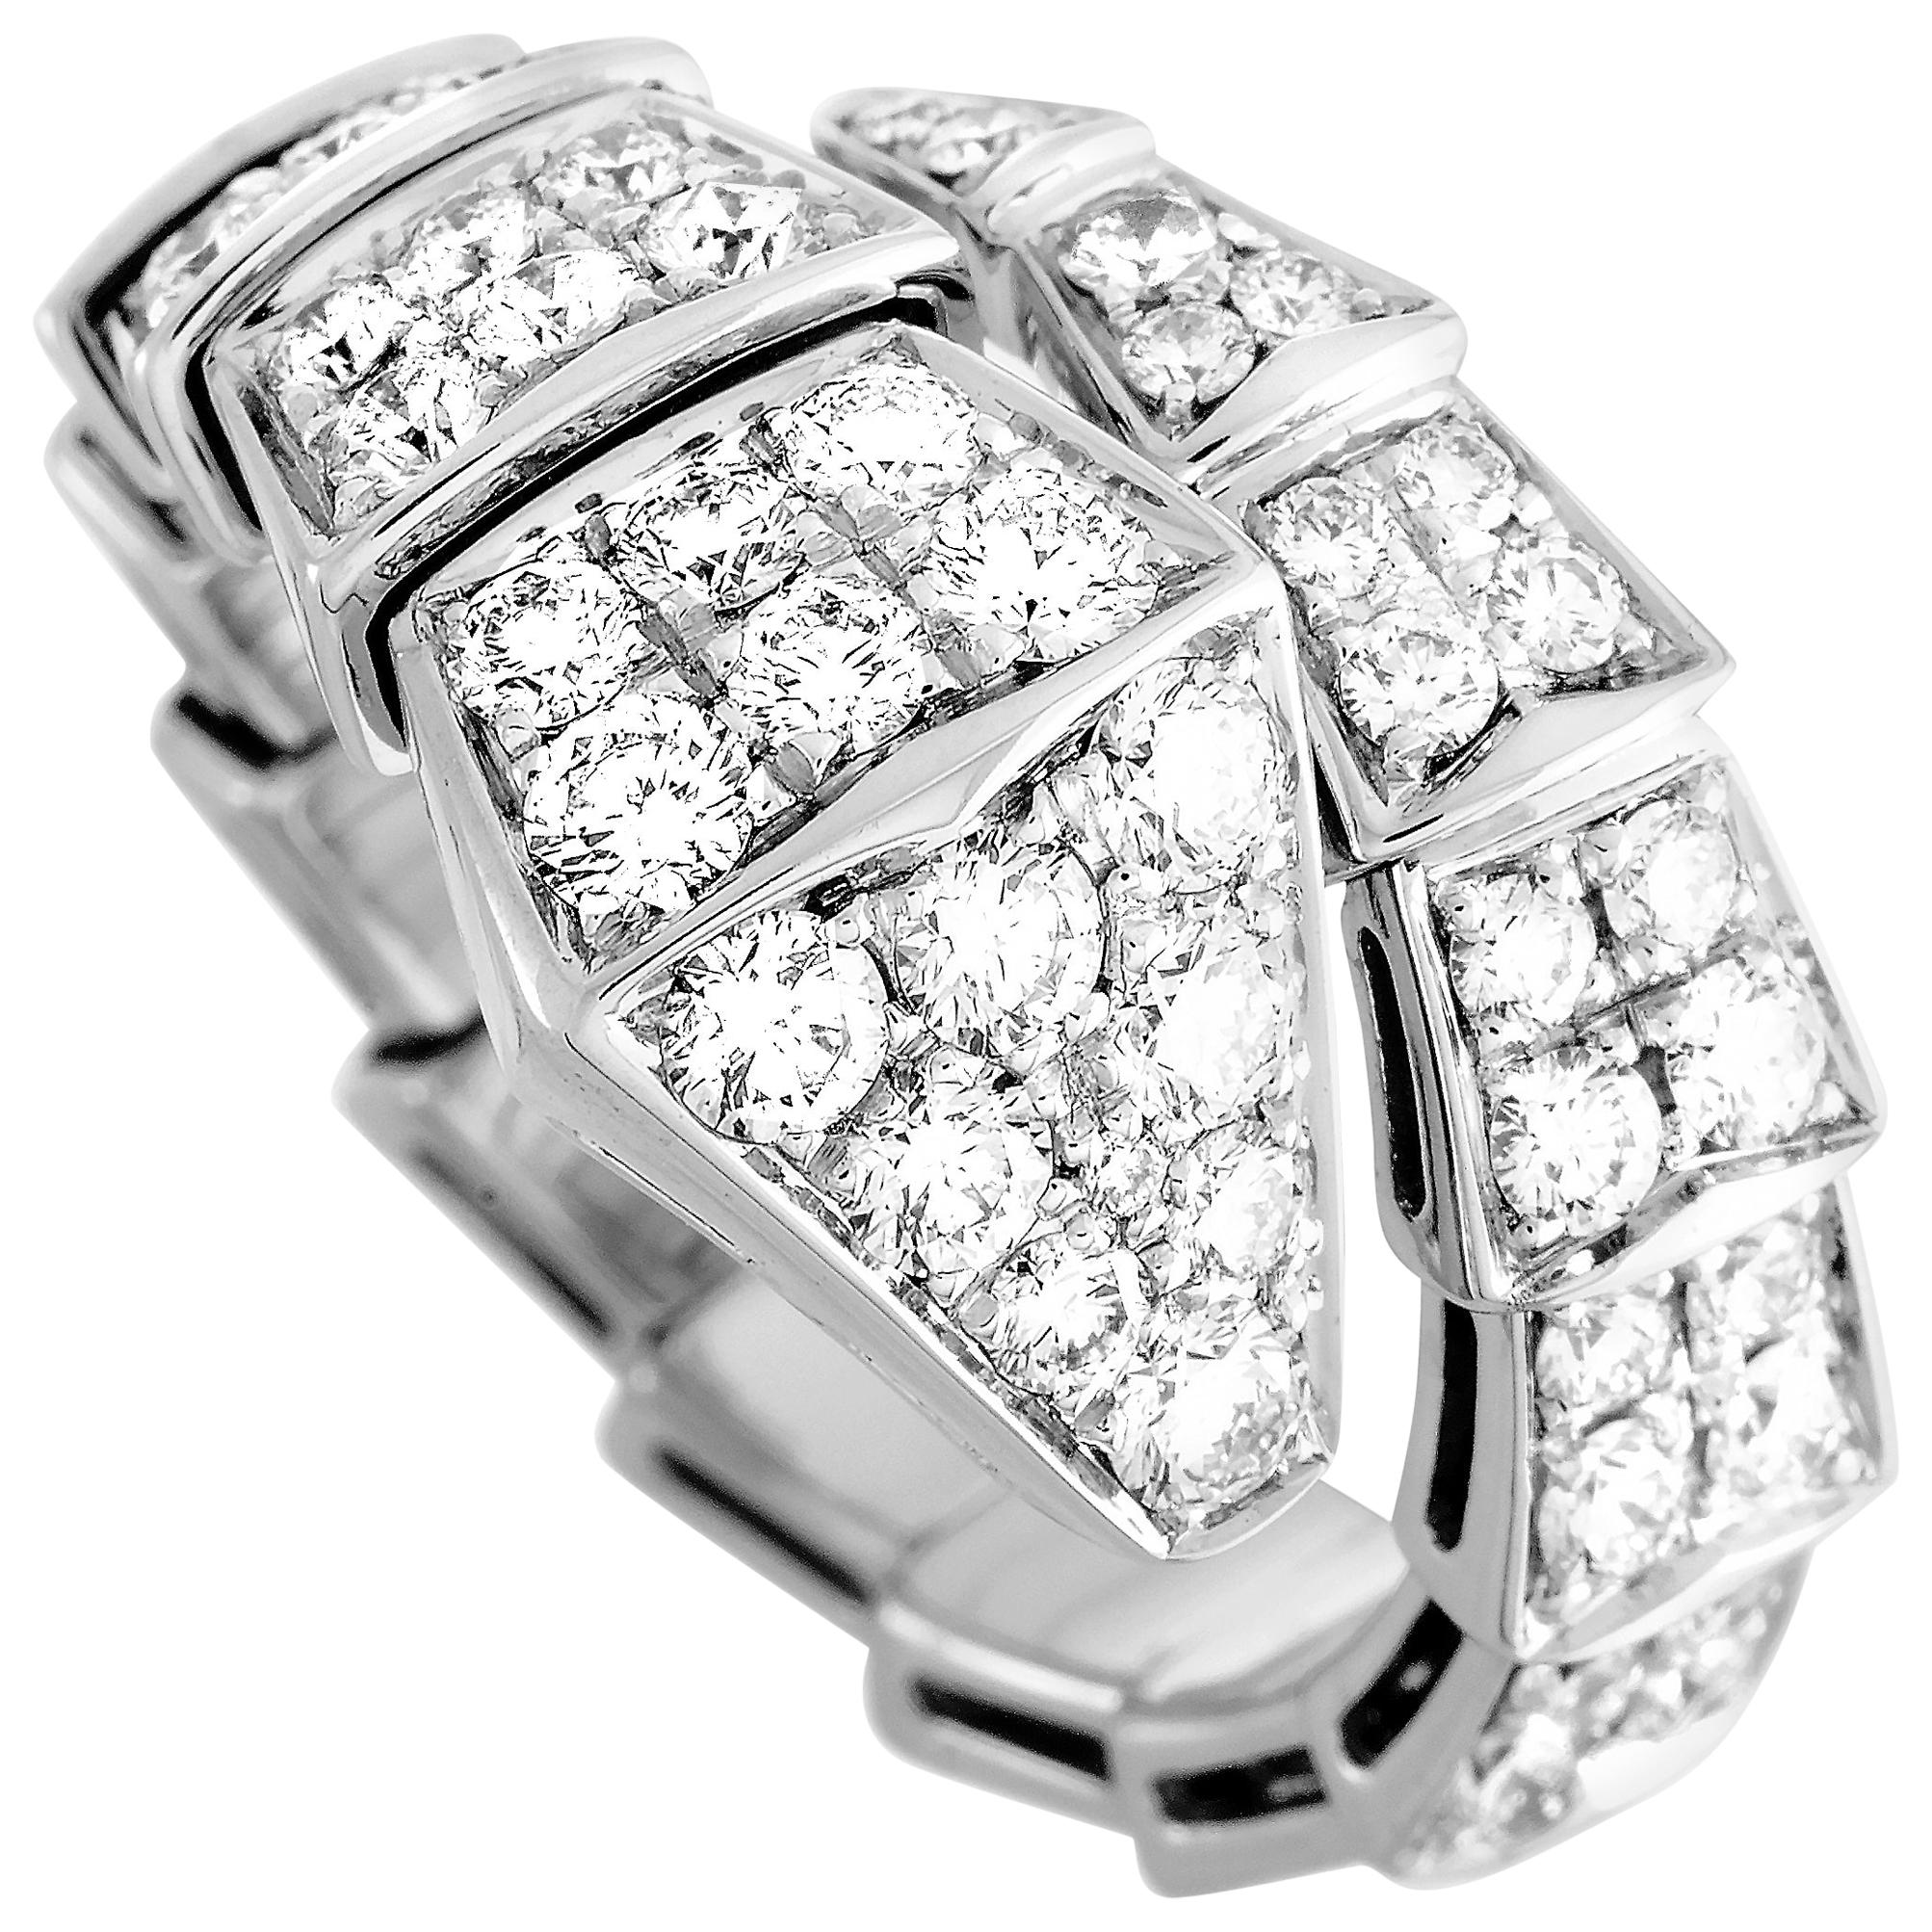 Bvlgari Serpenti 18k White Gold Diamond Ring